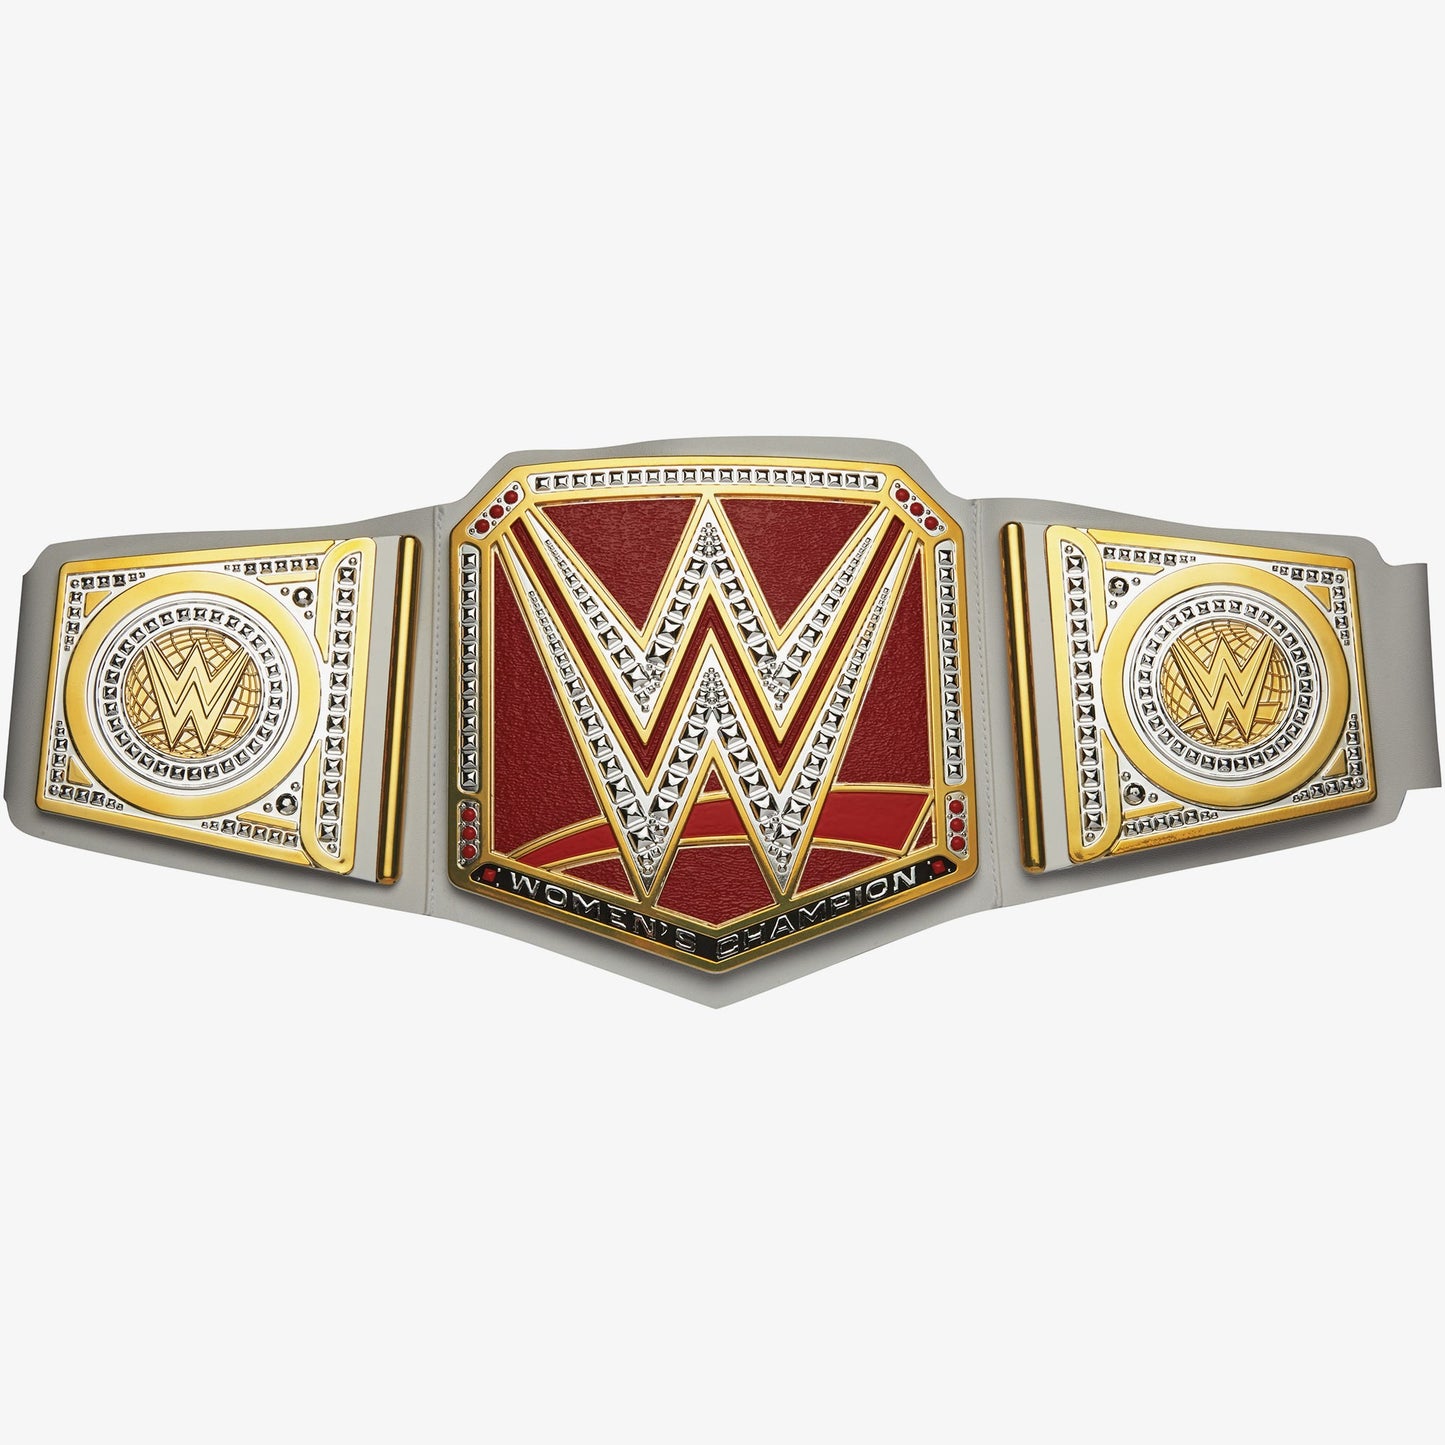 WWE RAW Women's Championship Belt